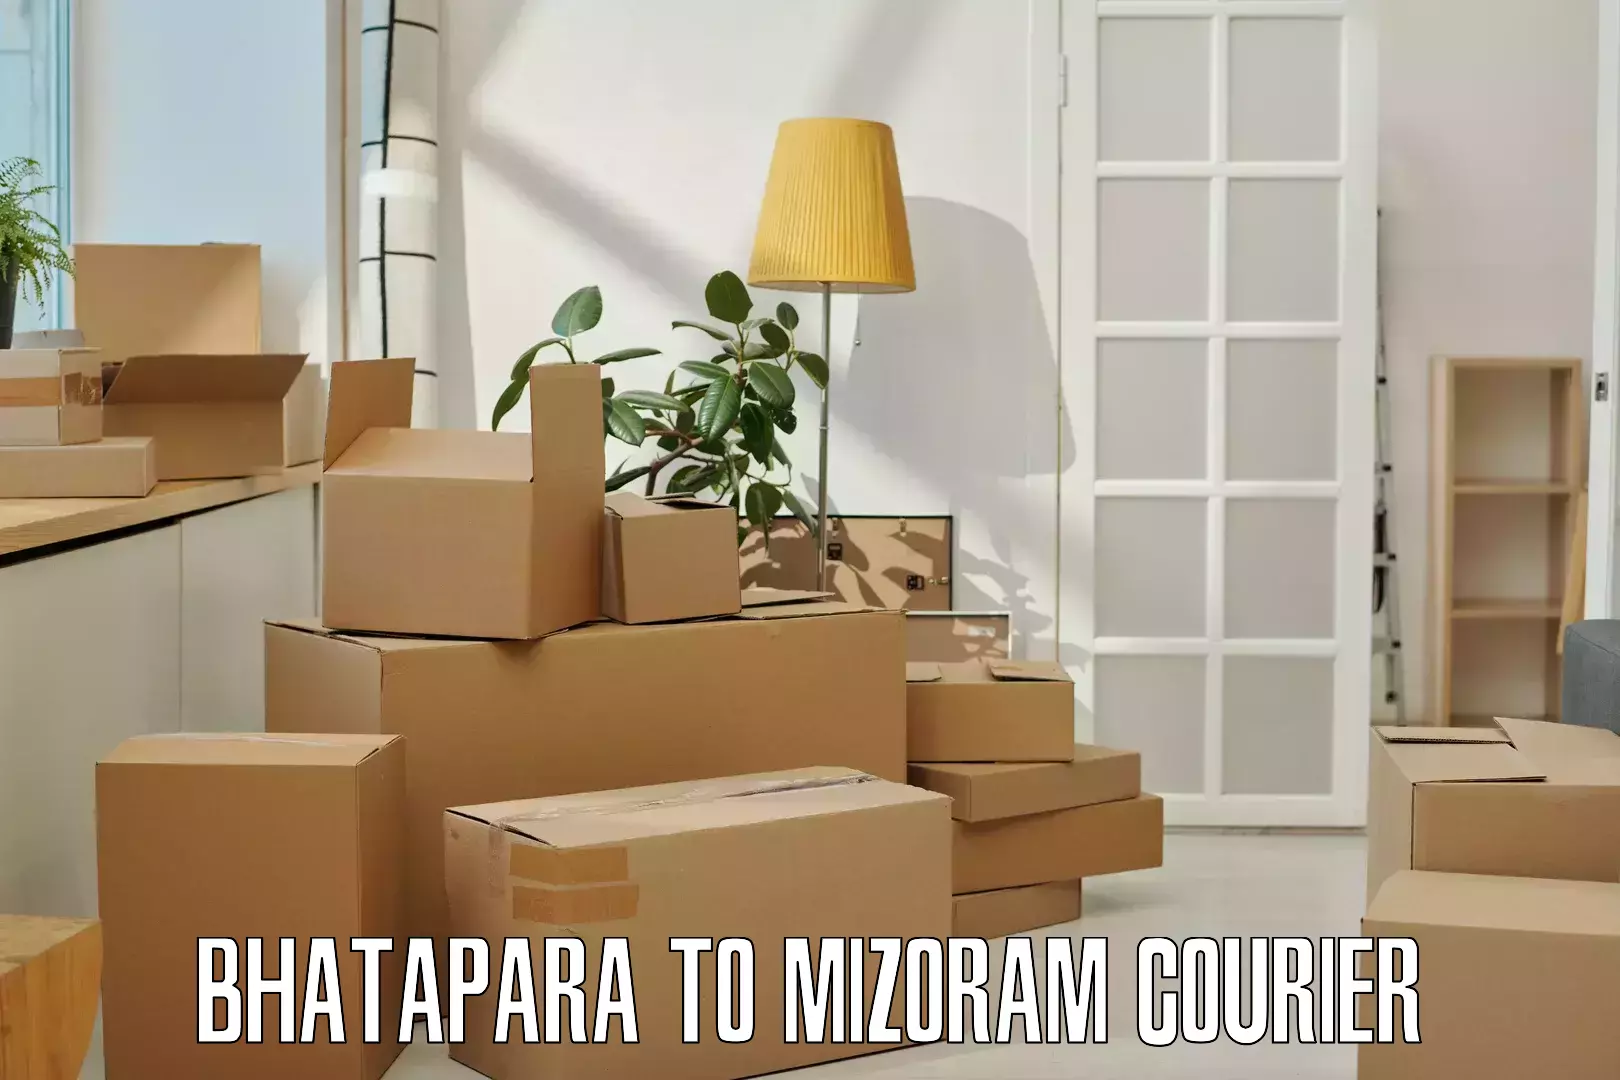 On-demand shipping options Bhatapara to Mizoram